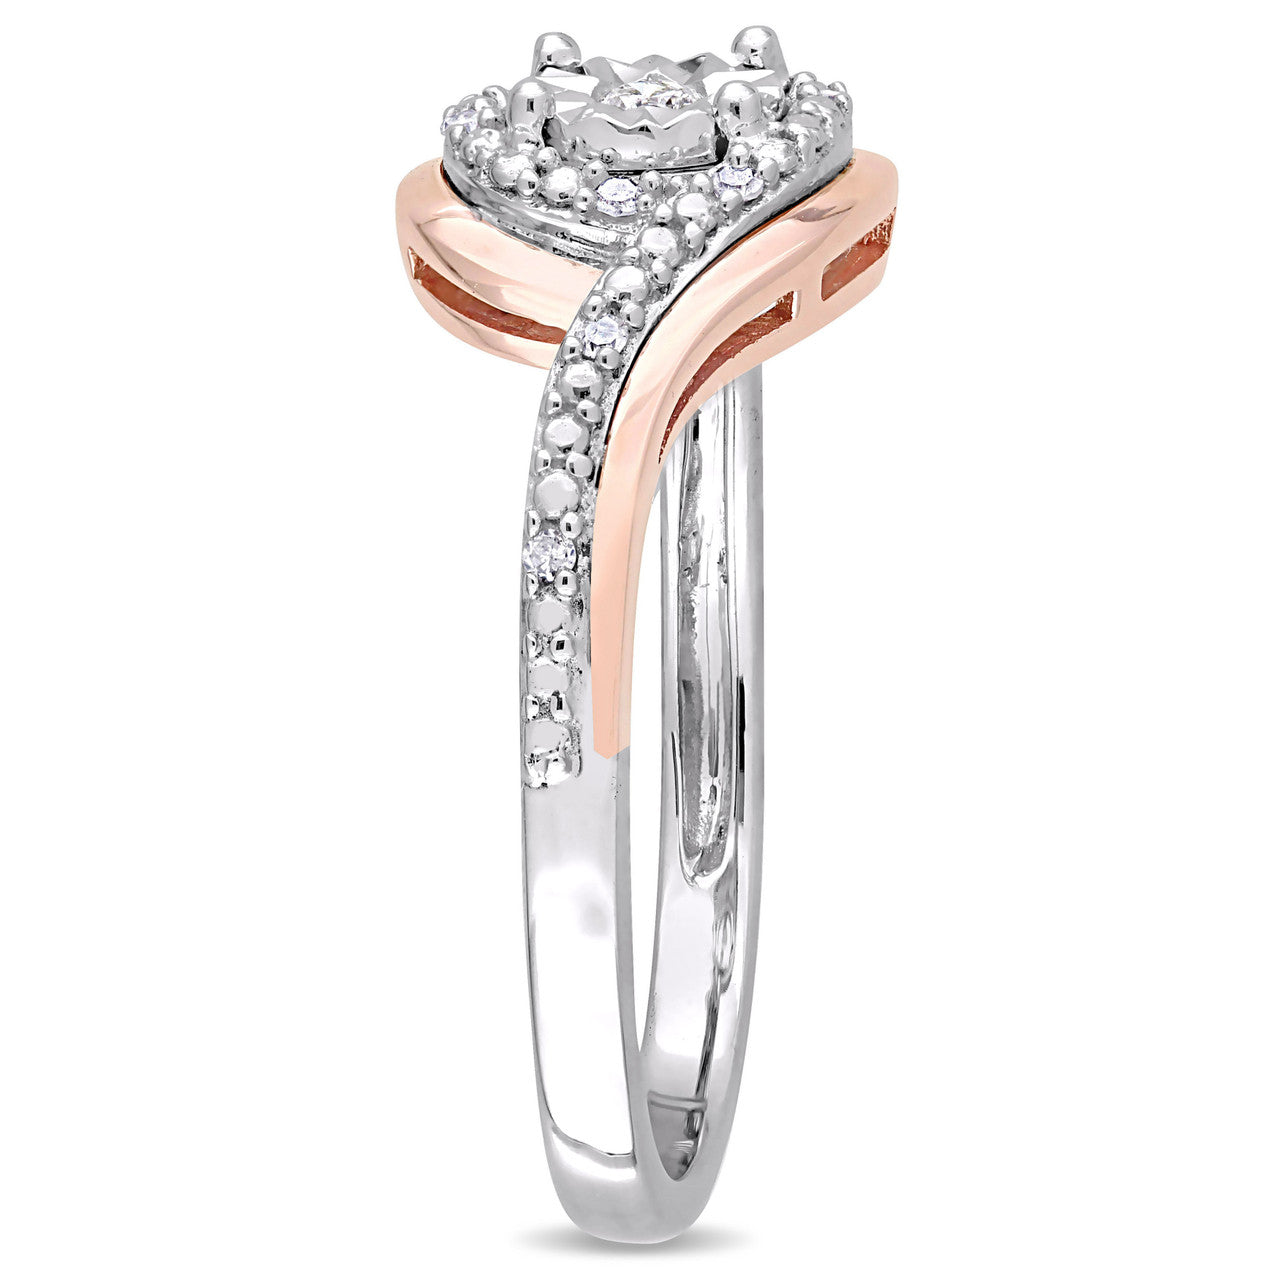 Ice Jewellery 1/10 CT Diamond TW Fashion Ring 10k White Pink Gold GH I2;I3 - 75000004559 | Ice Jewellery Australia